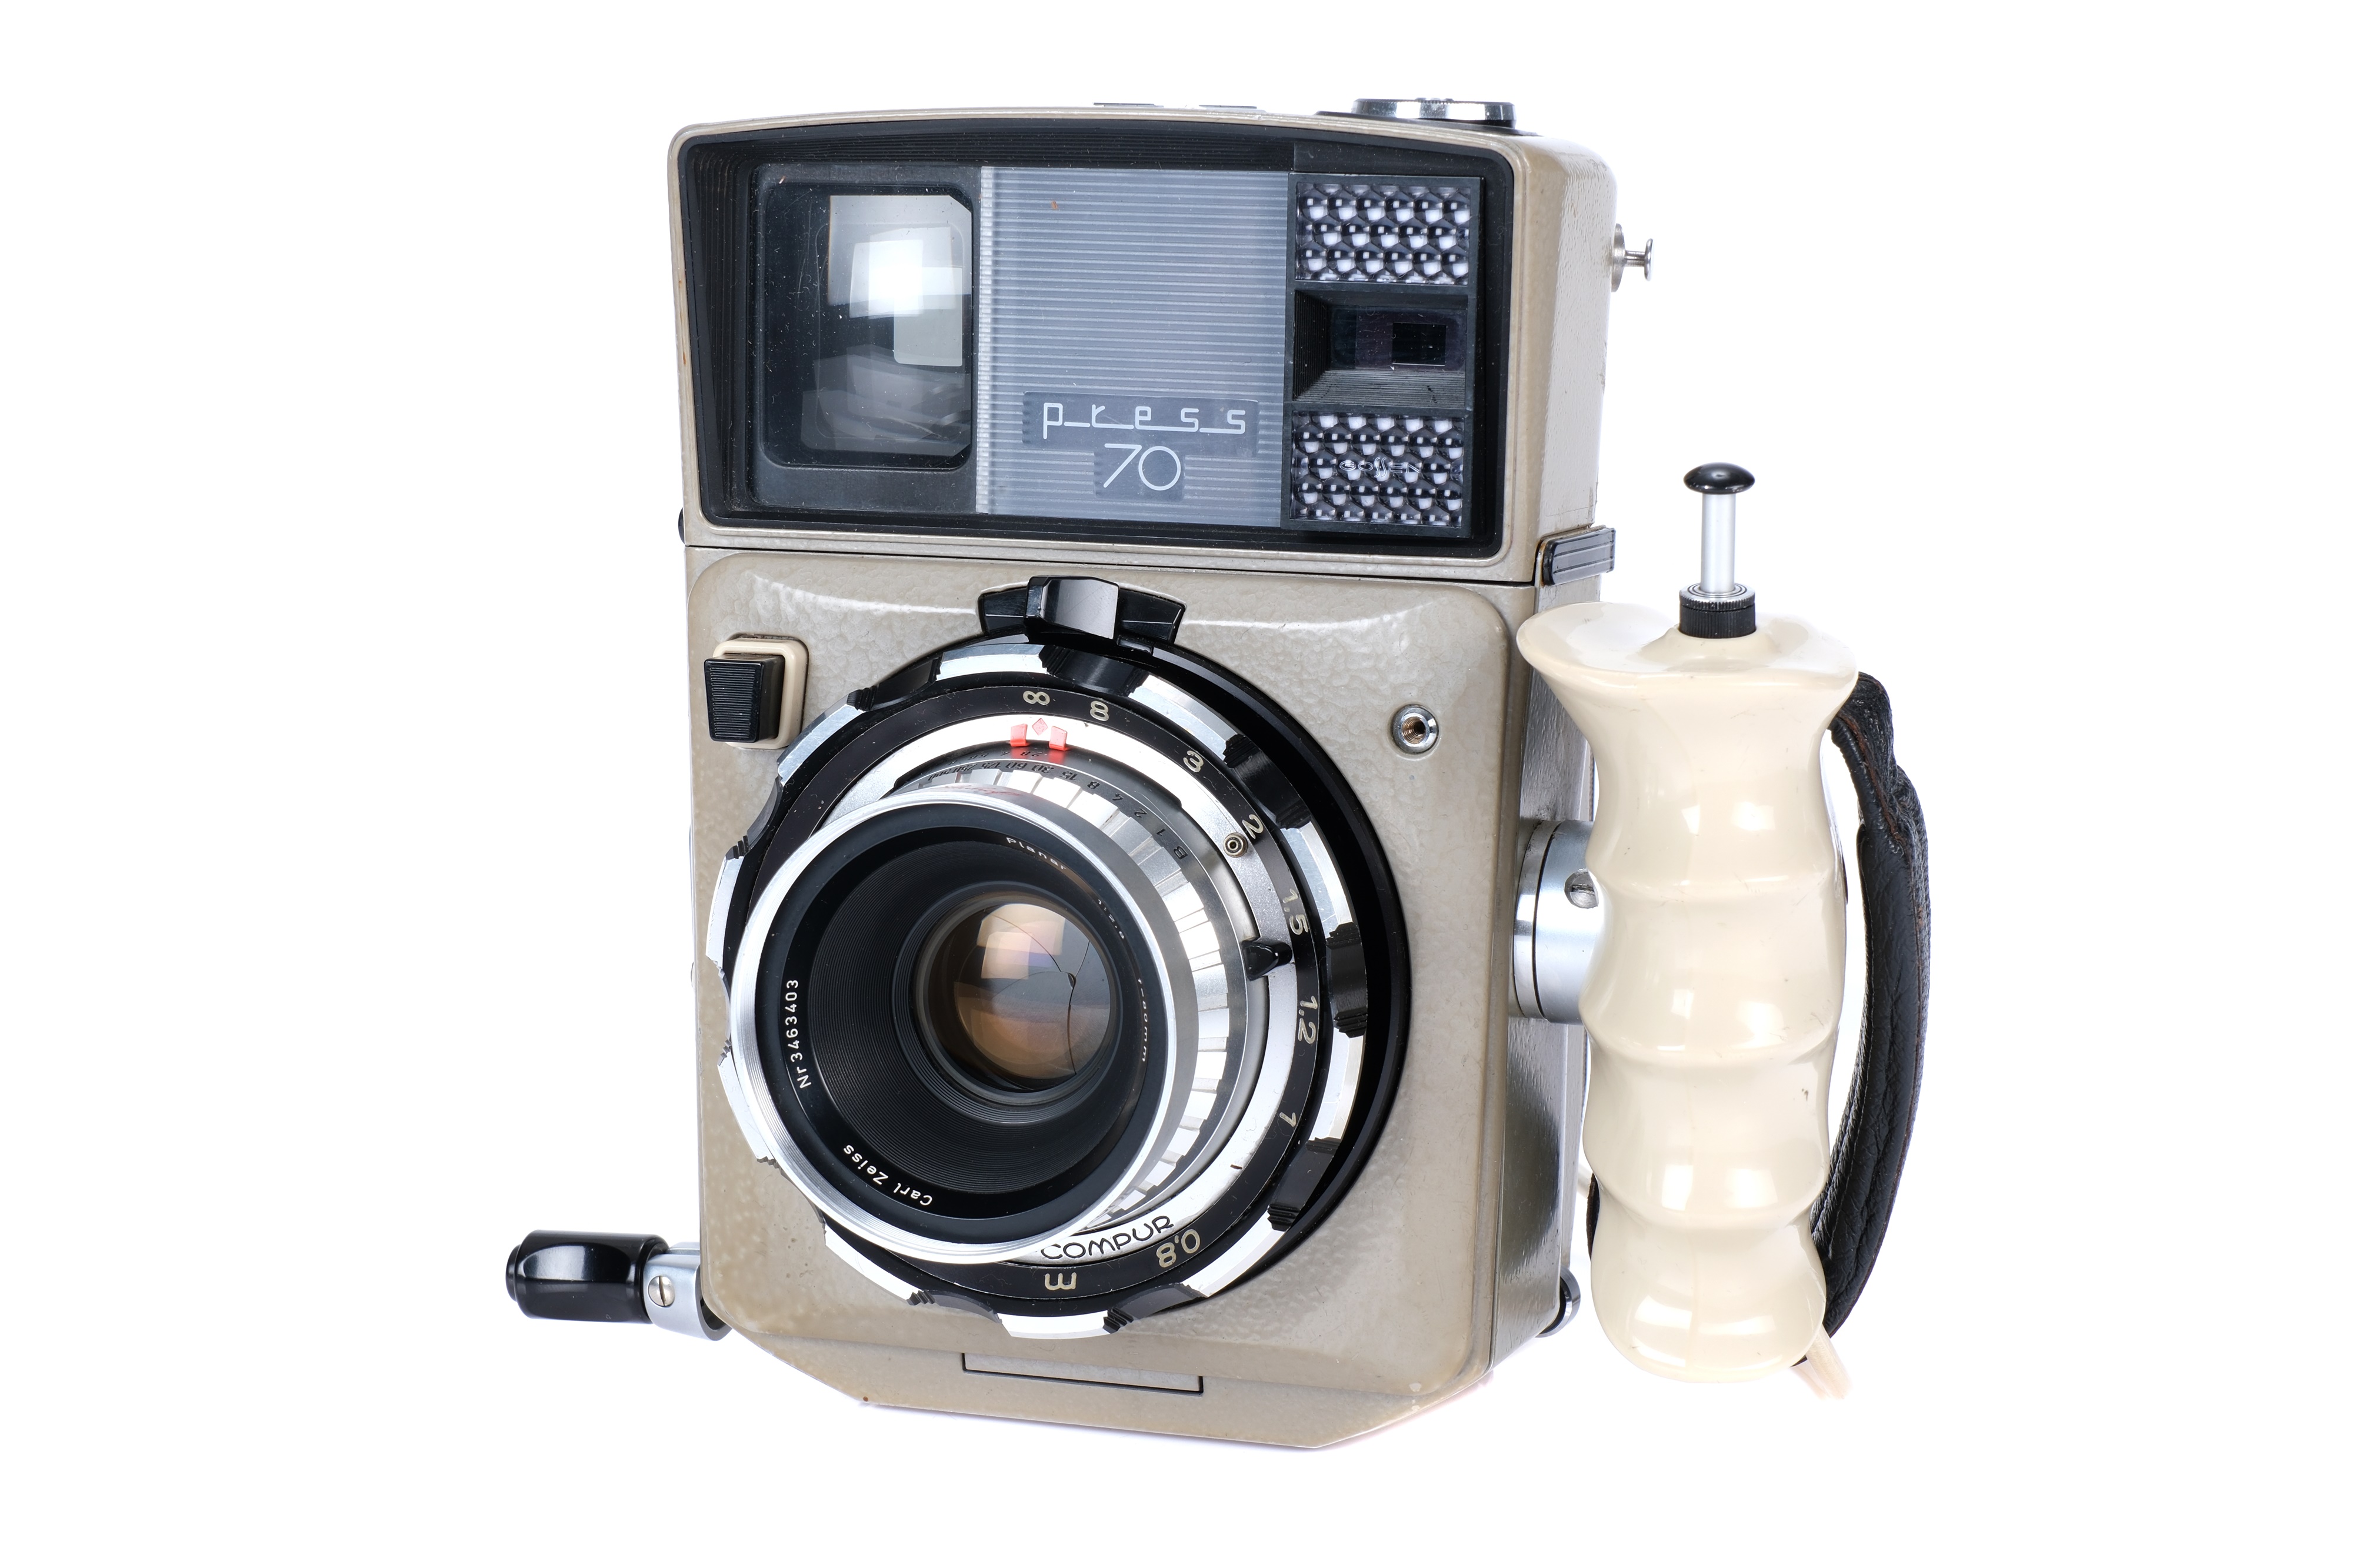 A Linhof Press 70 Medium Format Rangefinder Camera, - Image 2 of 4